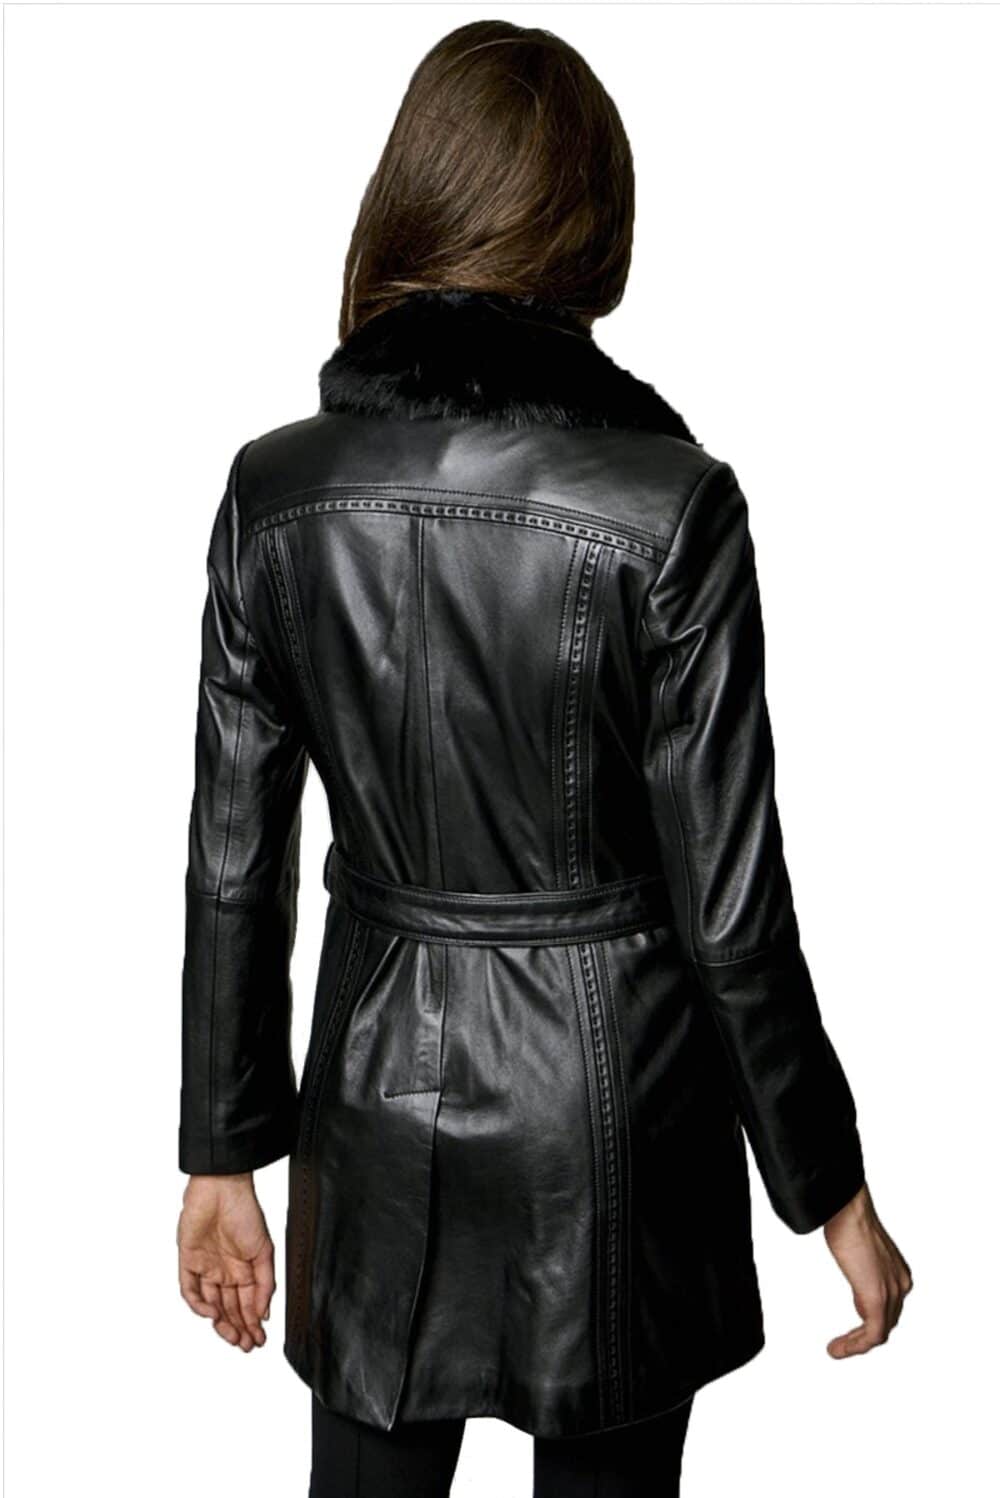 Ladies Black Moto Leather Jacket - Biker Fashion in Carolina